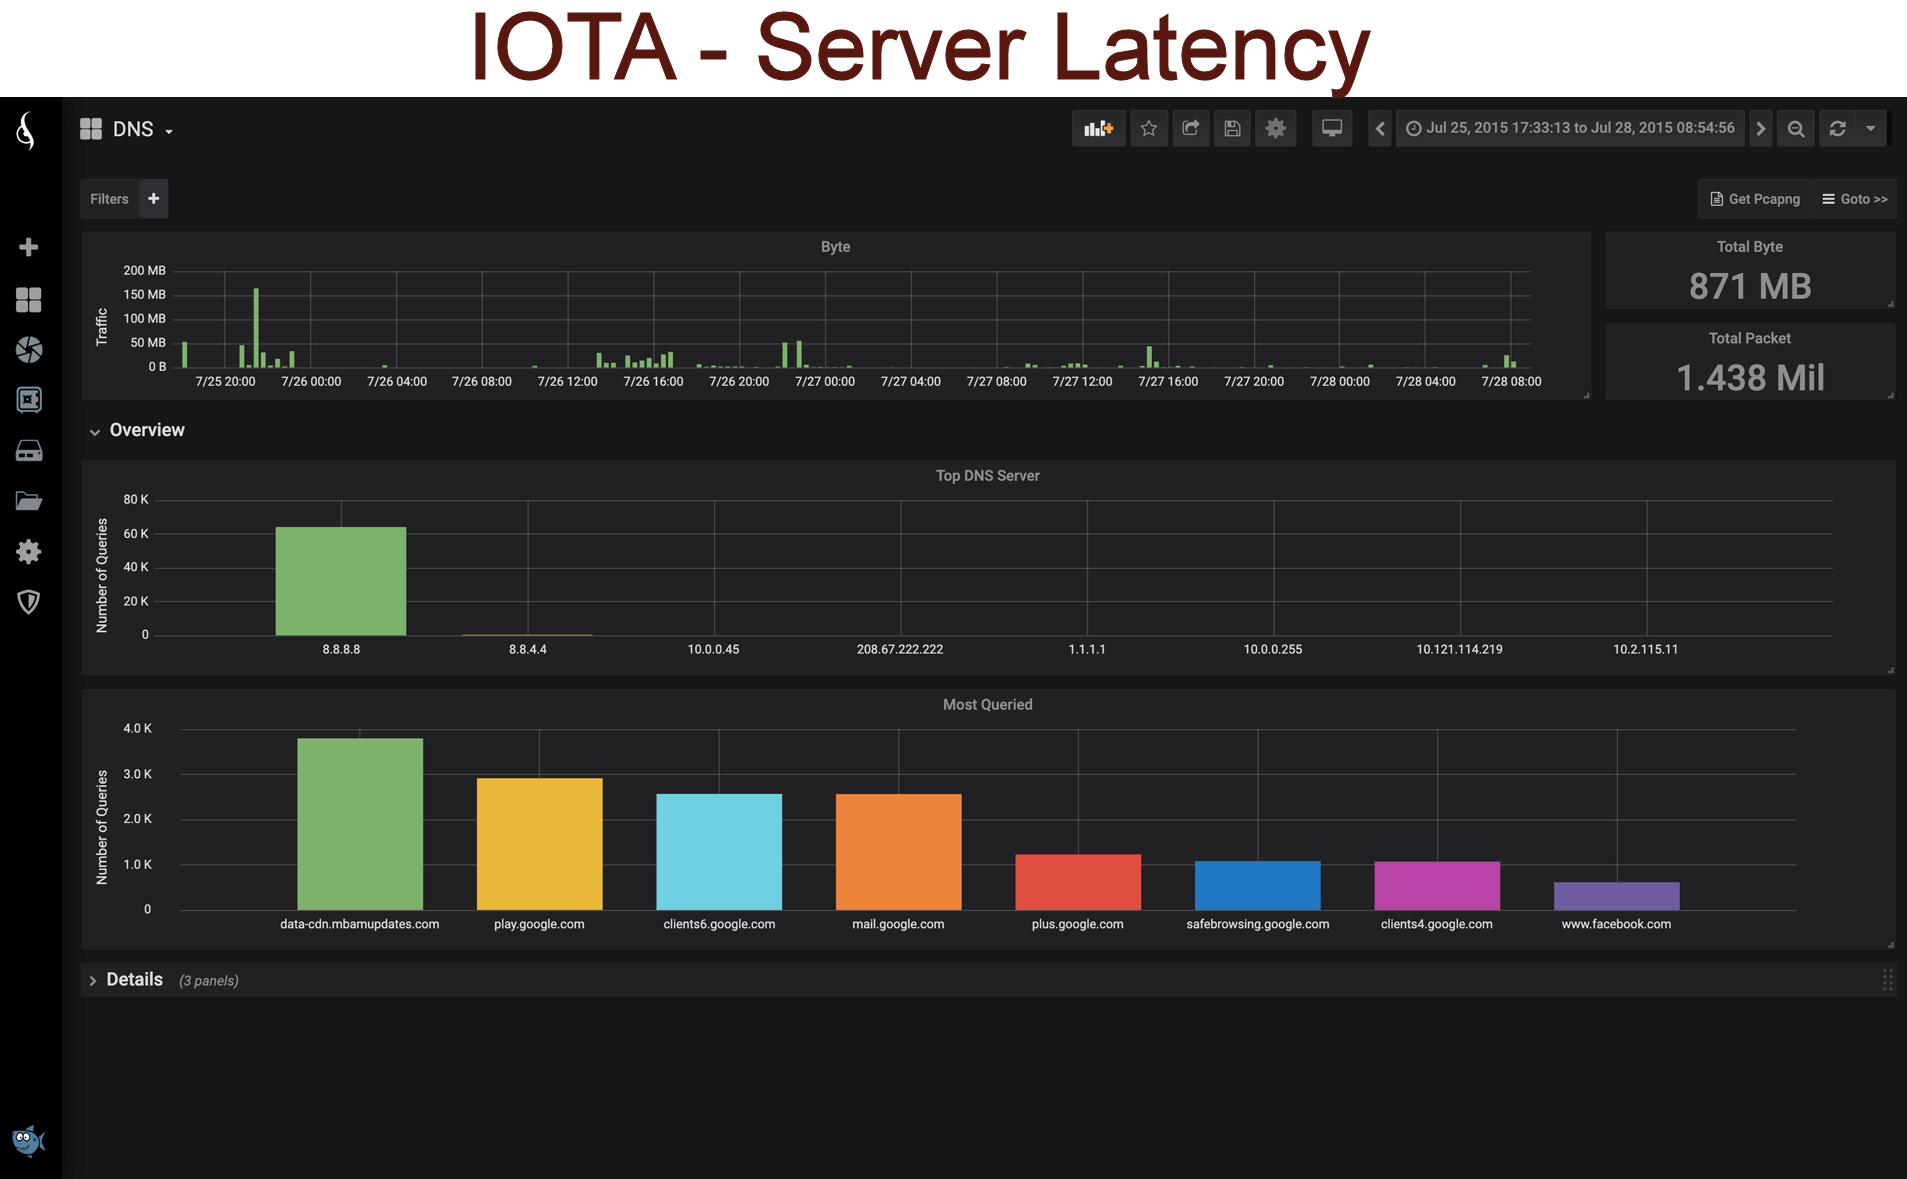 IOTA - Server Latency